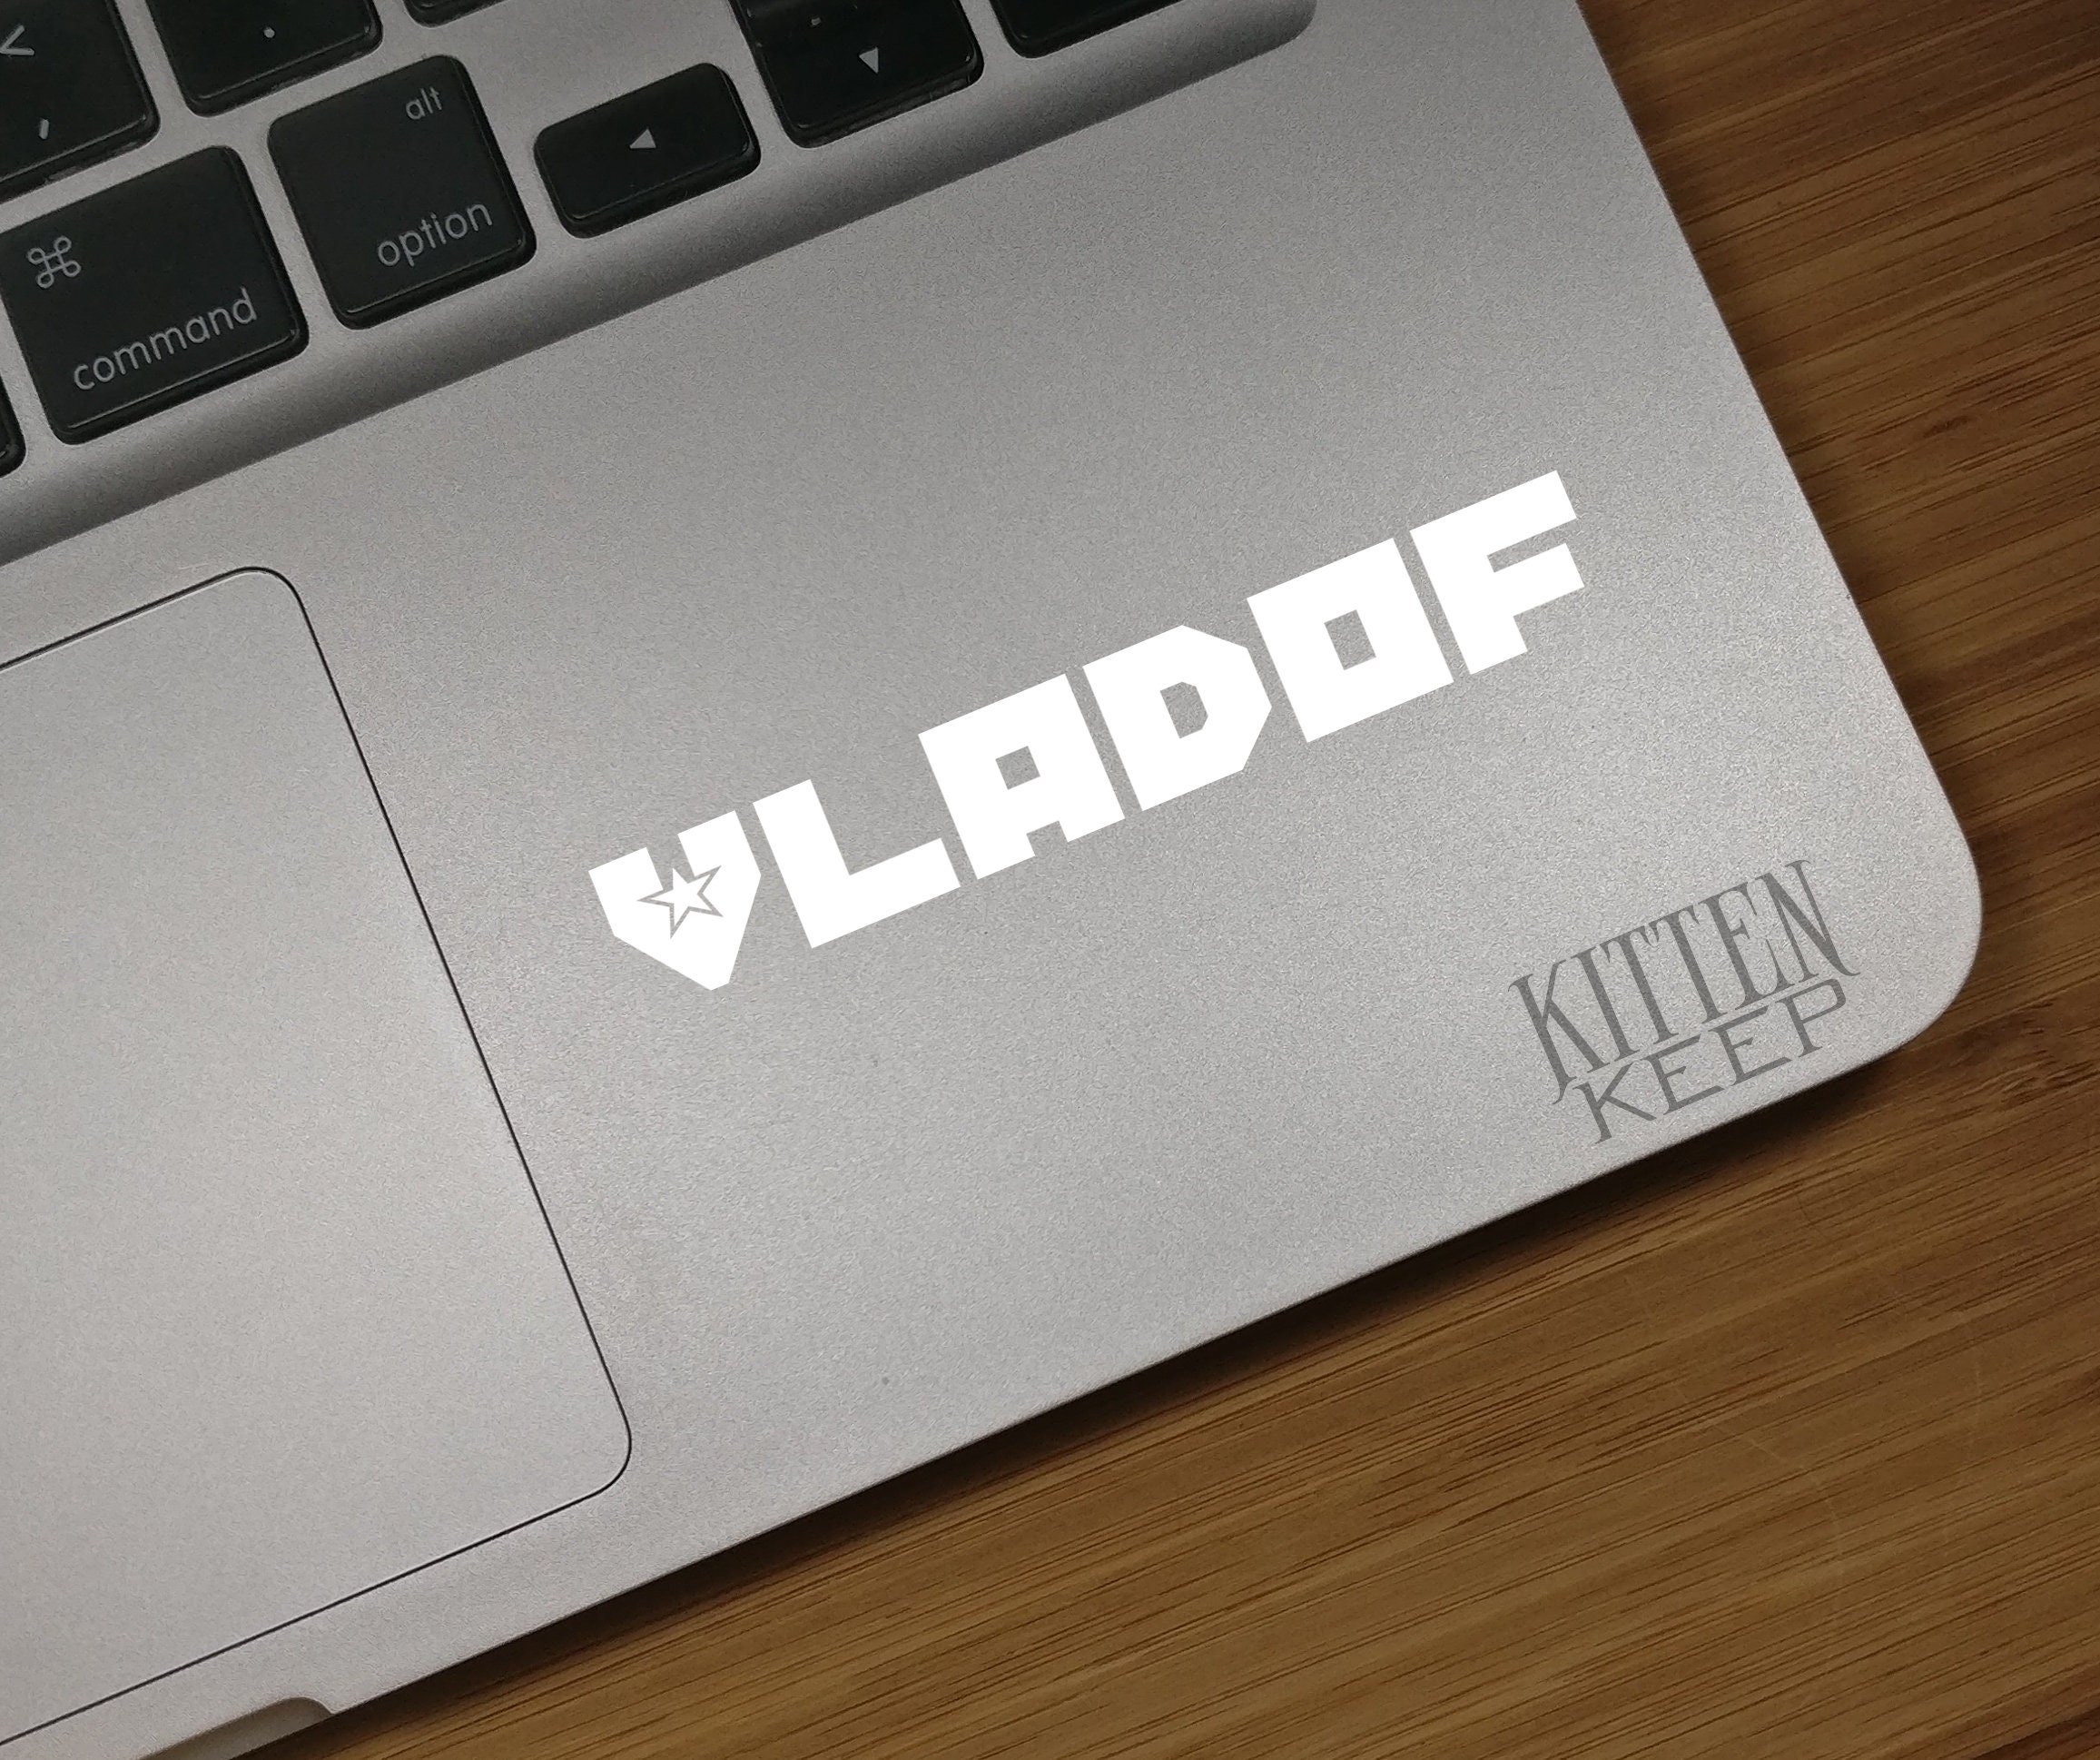 Vladof Logo Vinyl Decal | Borderlands